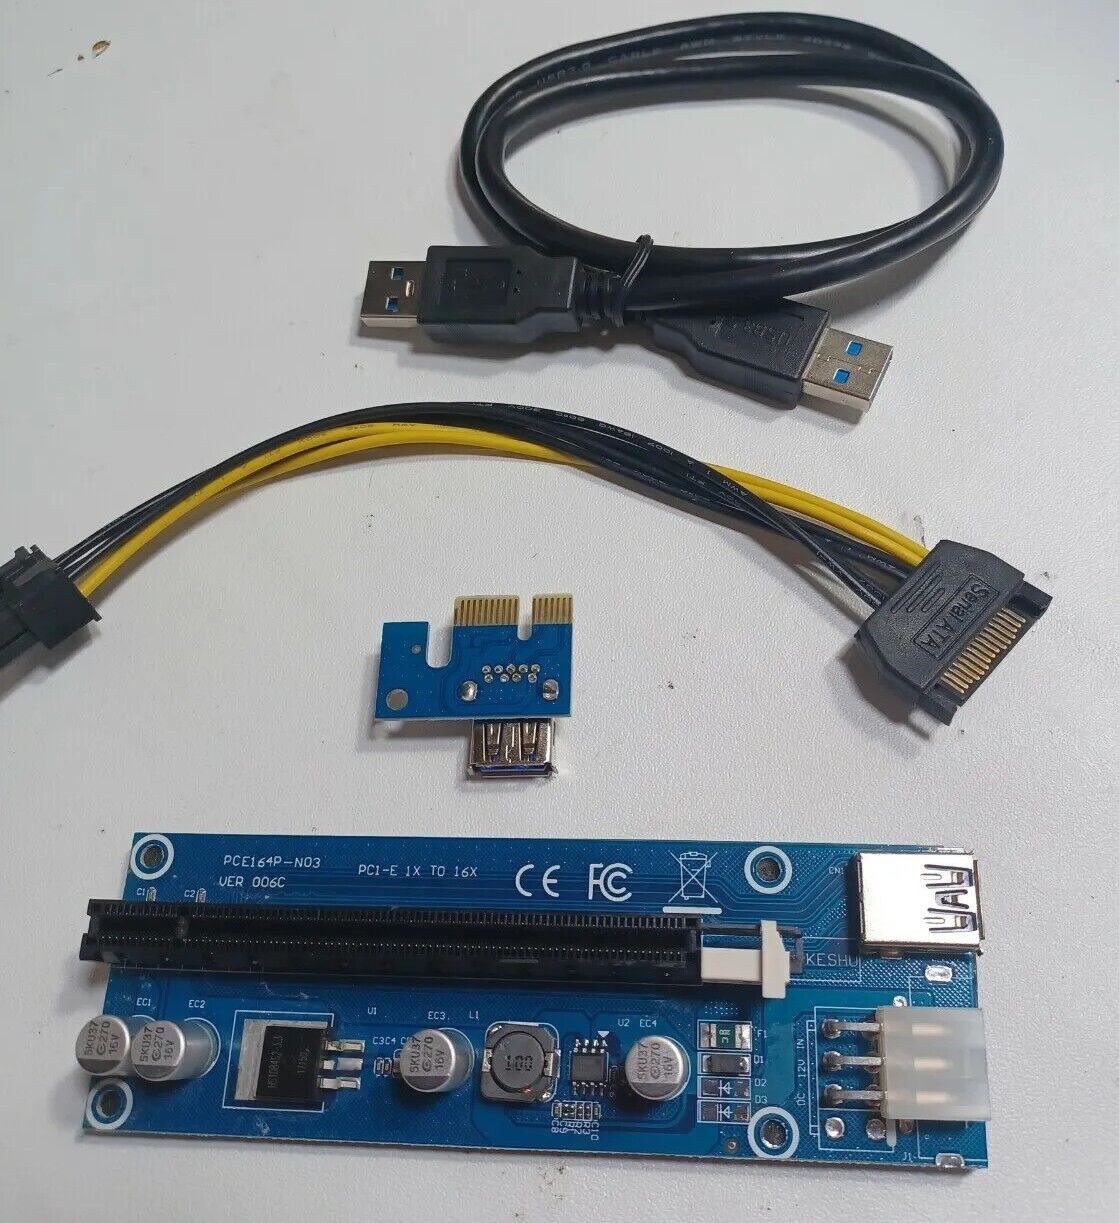 2 Pack PCE164P-N03 Ver 006C PCI-E 1X To 16X USB 3.0 PCE164P-NO3 Raiser Card